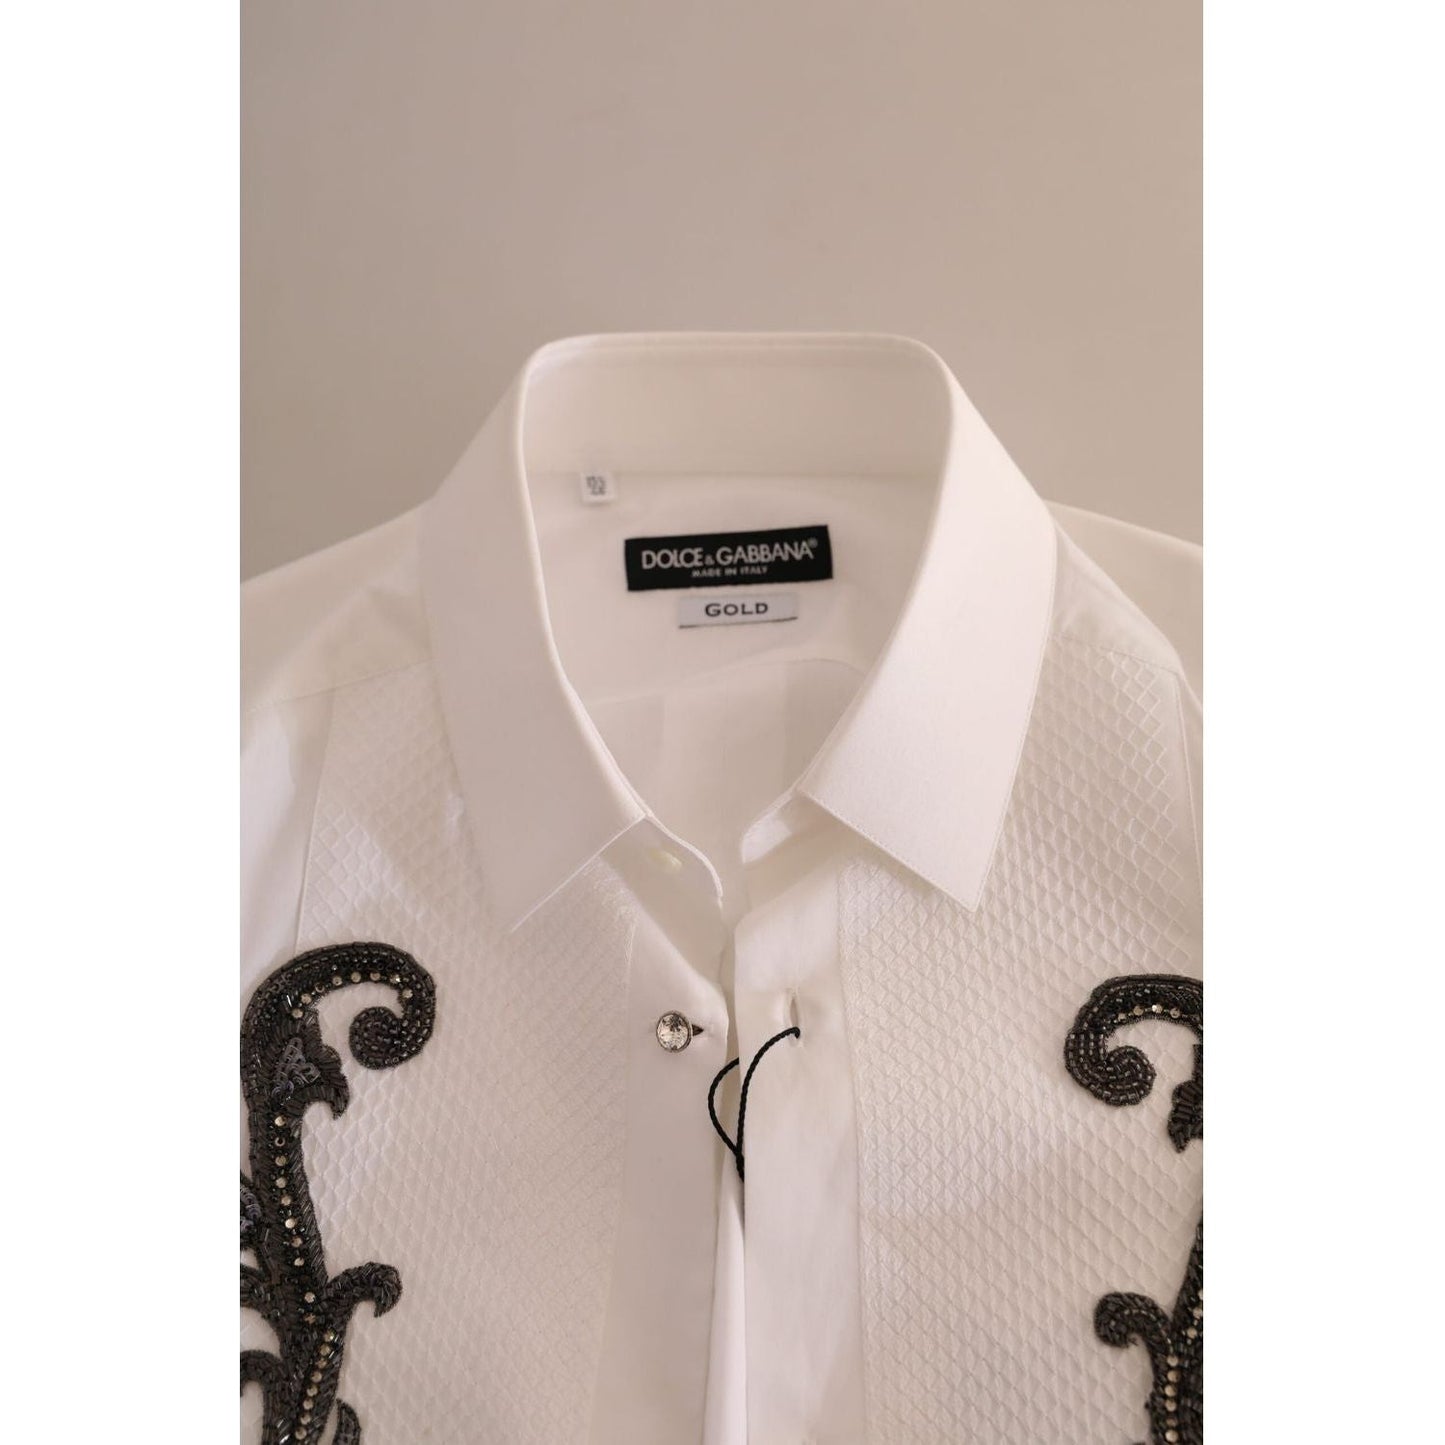 Dolce & Gabbana Italian Designer Slim Fit Tuxedo Shirt white-tuxedo-slim-fit-baroque-shirt 465A9598-scaled-6001e596-4de.jpg